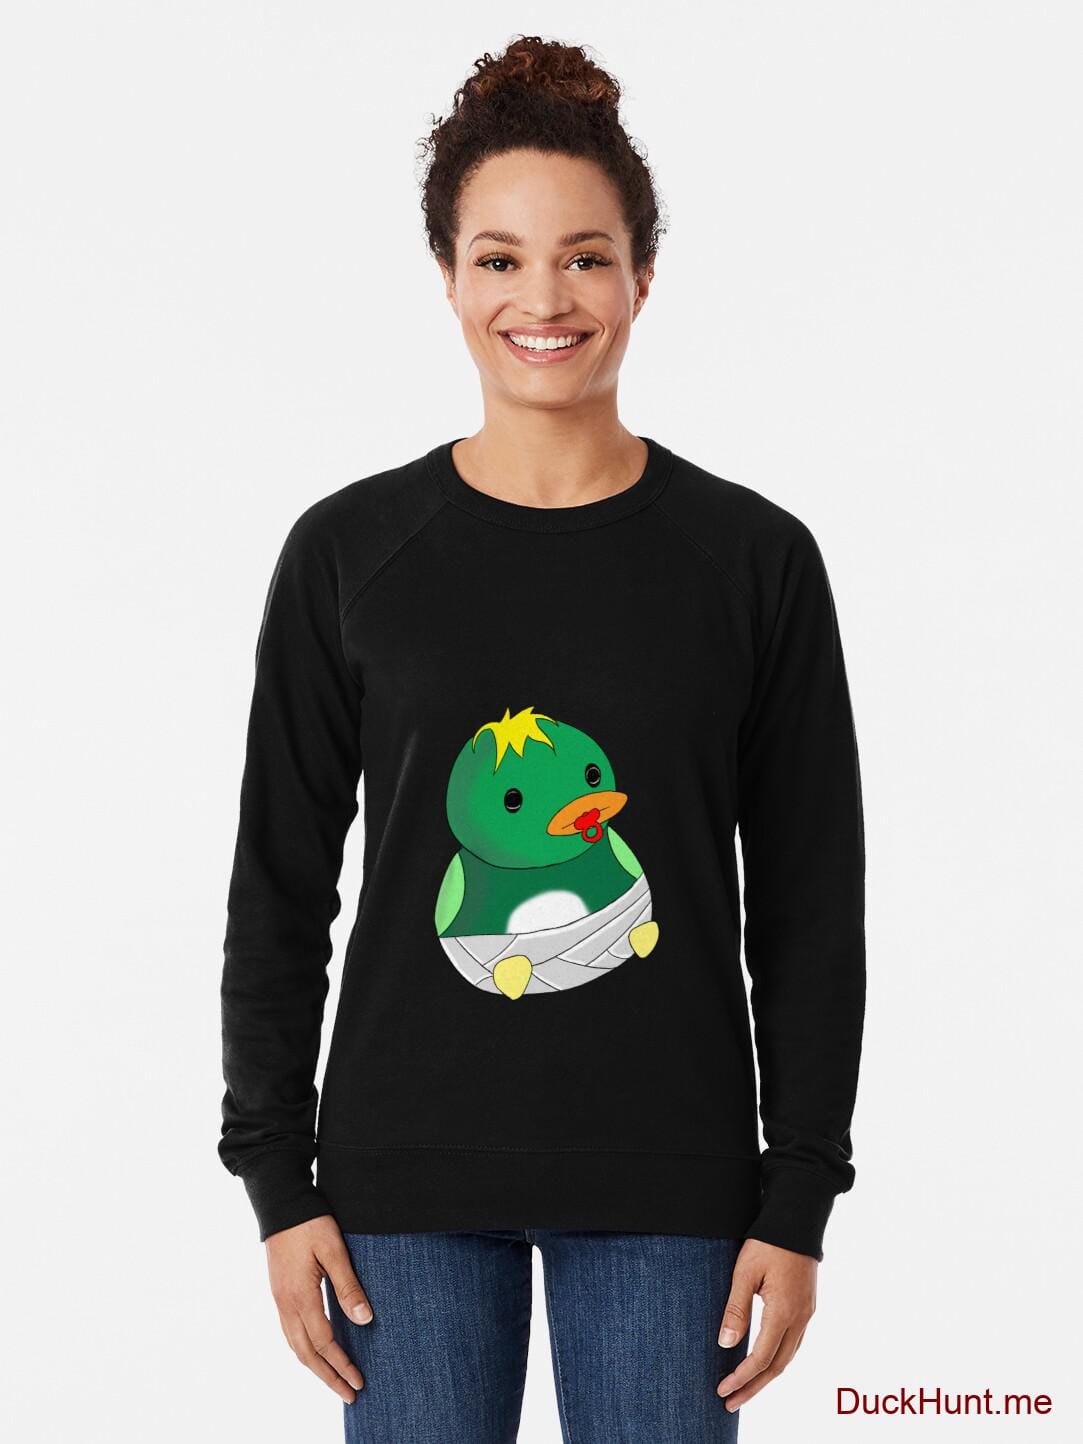 Baby duck Black Lightweight Sweatshirt alternative image 1